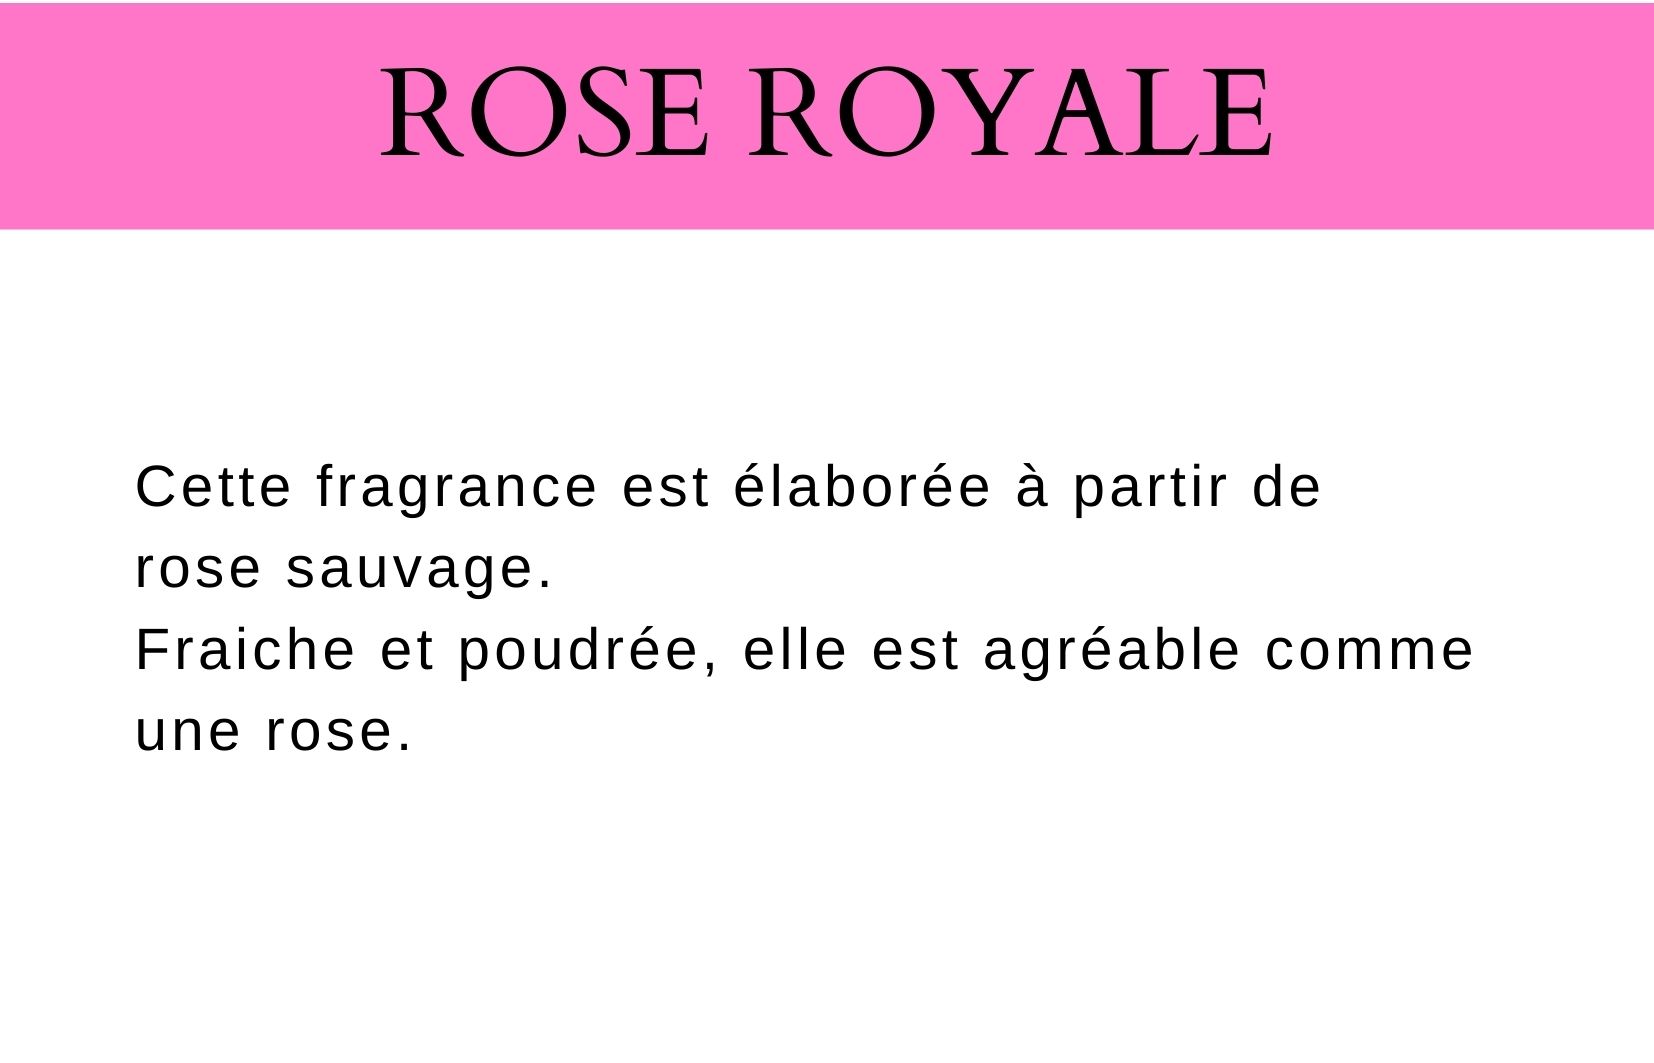 royal rose